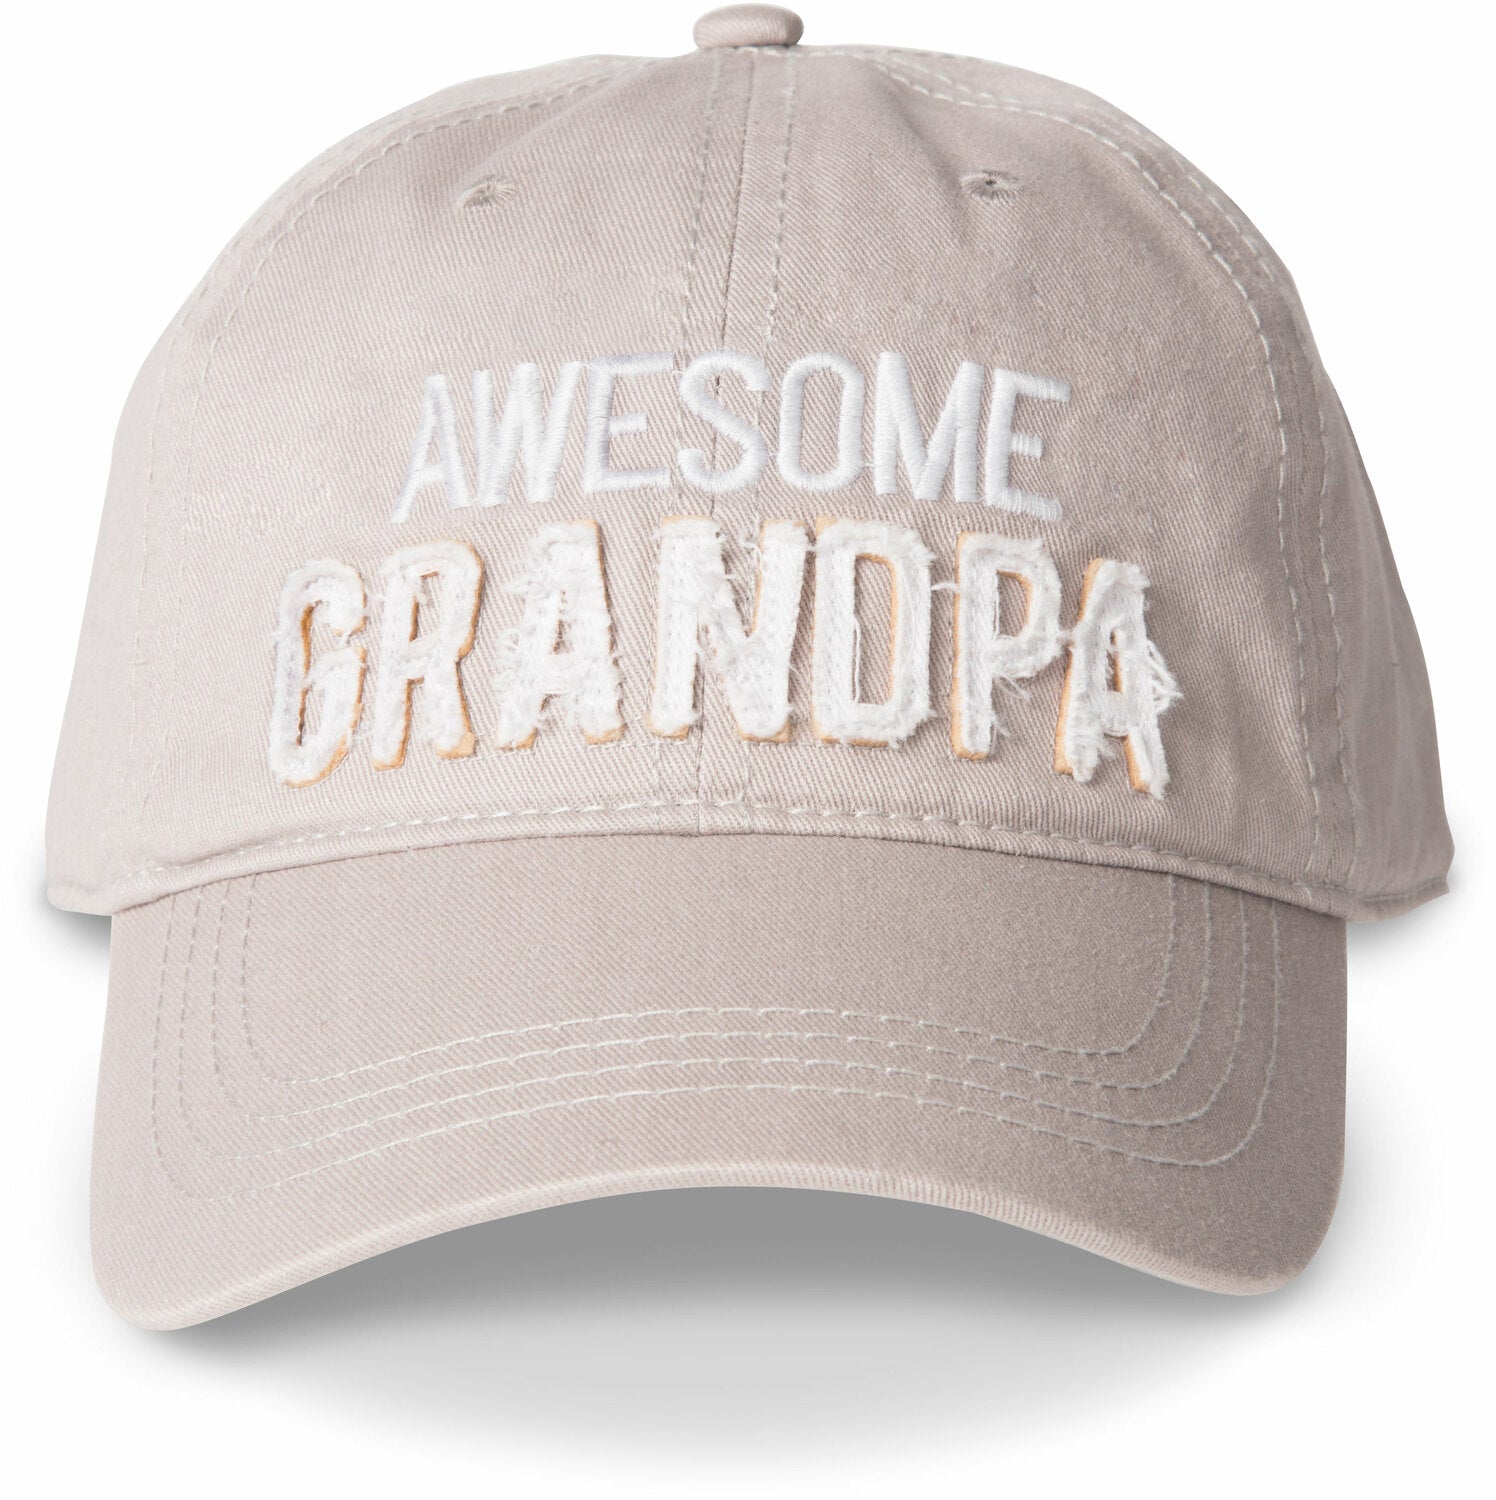 Adjustable Cap- Awesome Grandpa